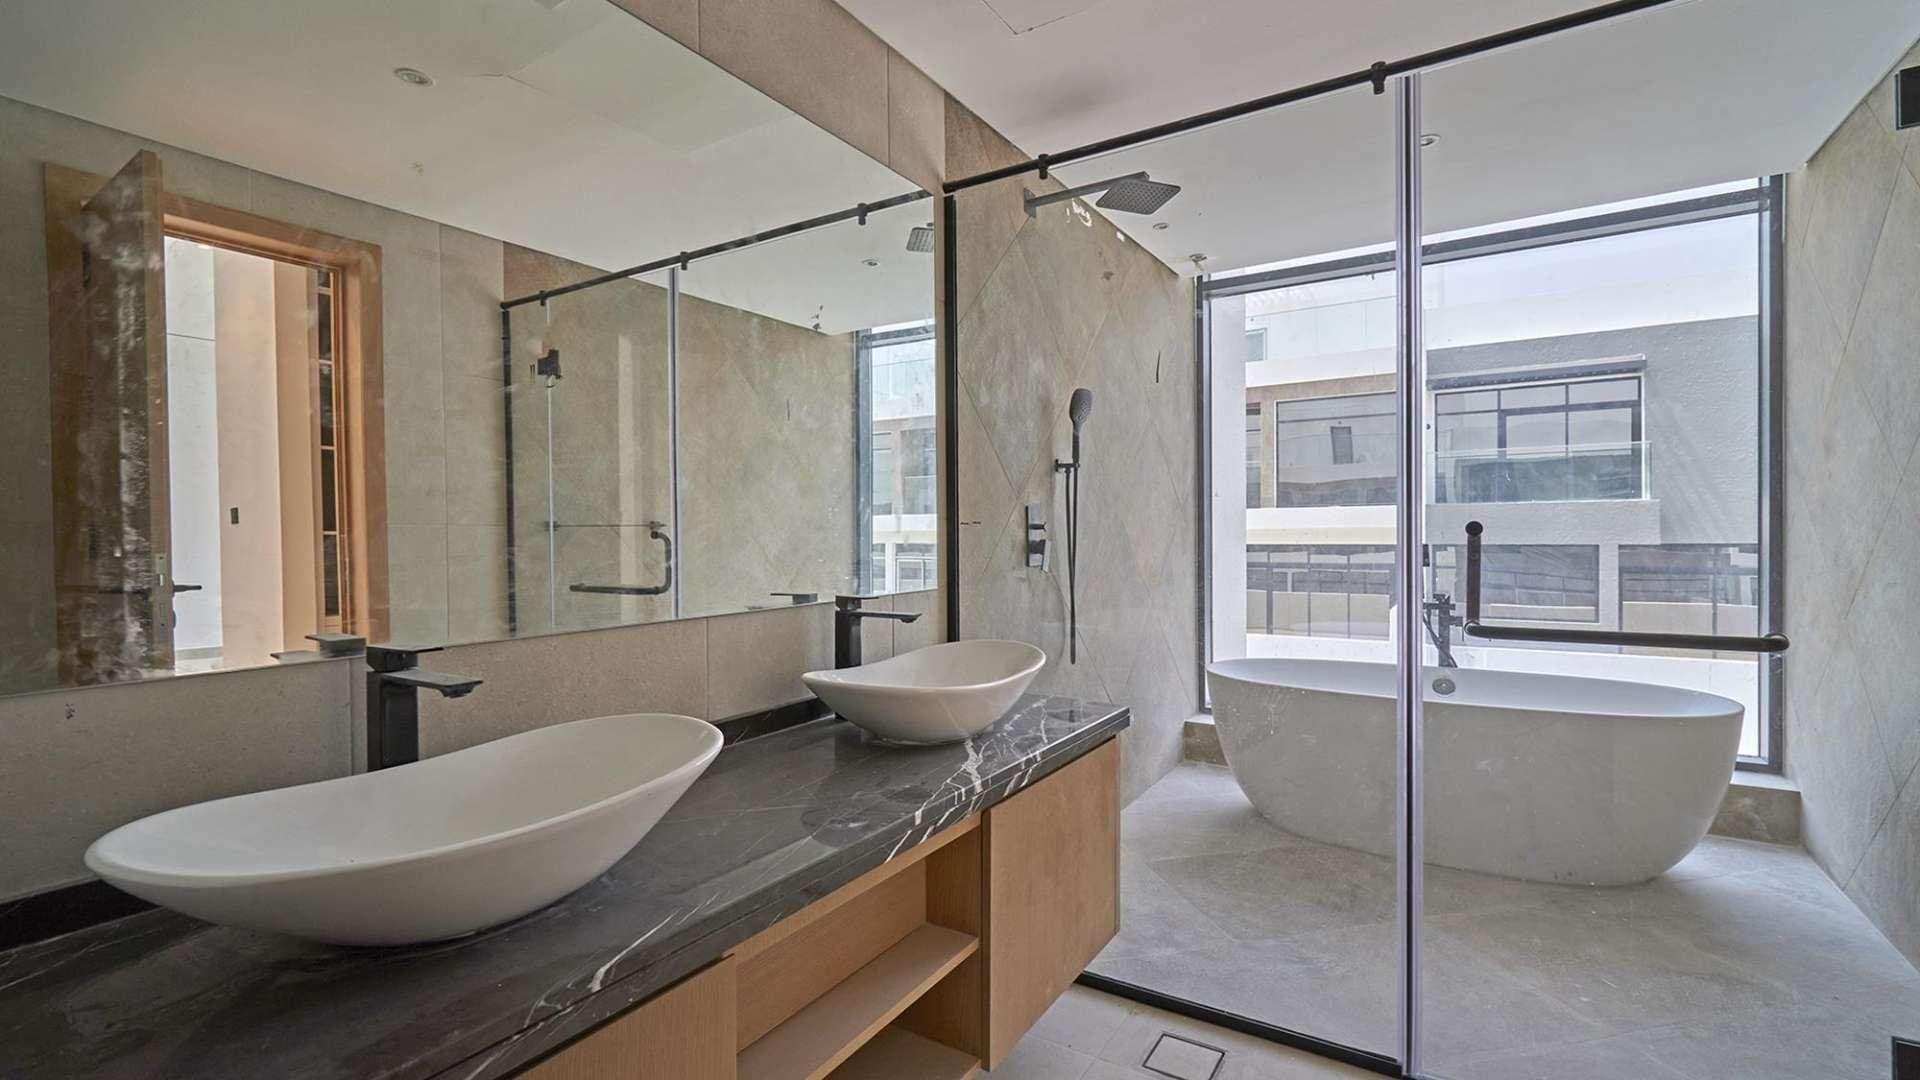 4 Bedroom Villa For Rent Jumeirah Luxury Lp16471 1d0a38b7aea2a600.jpg